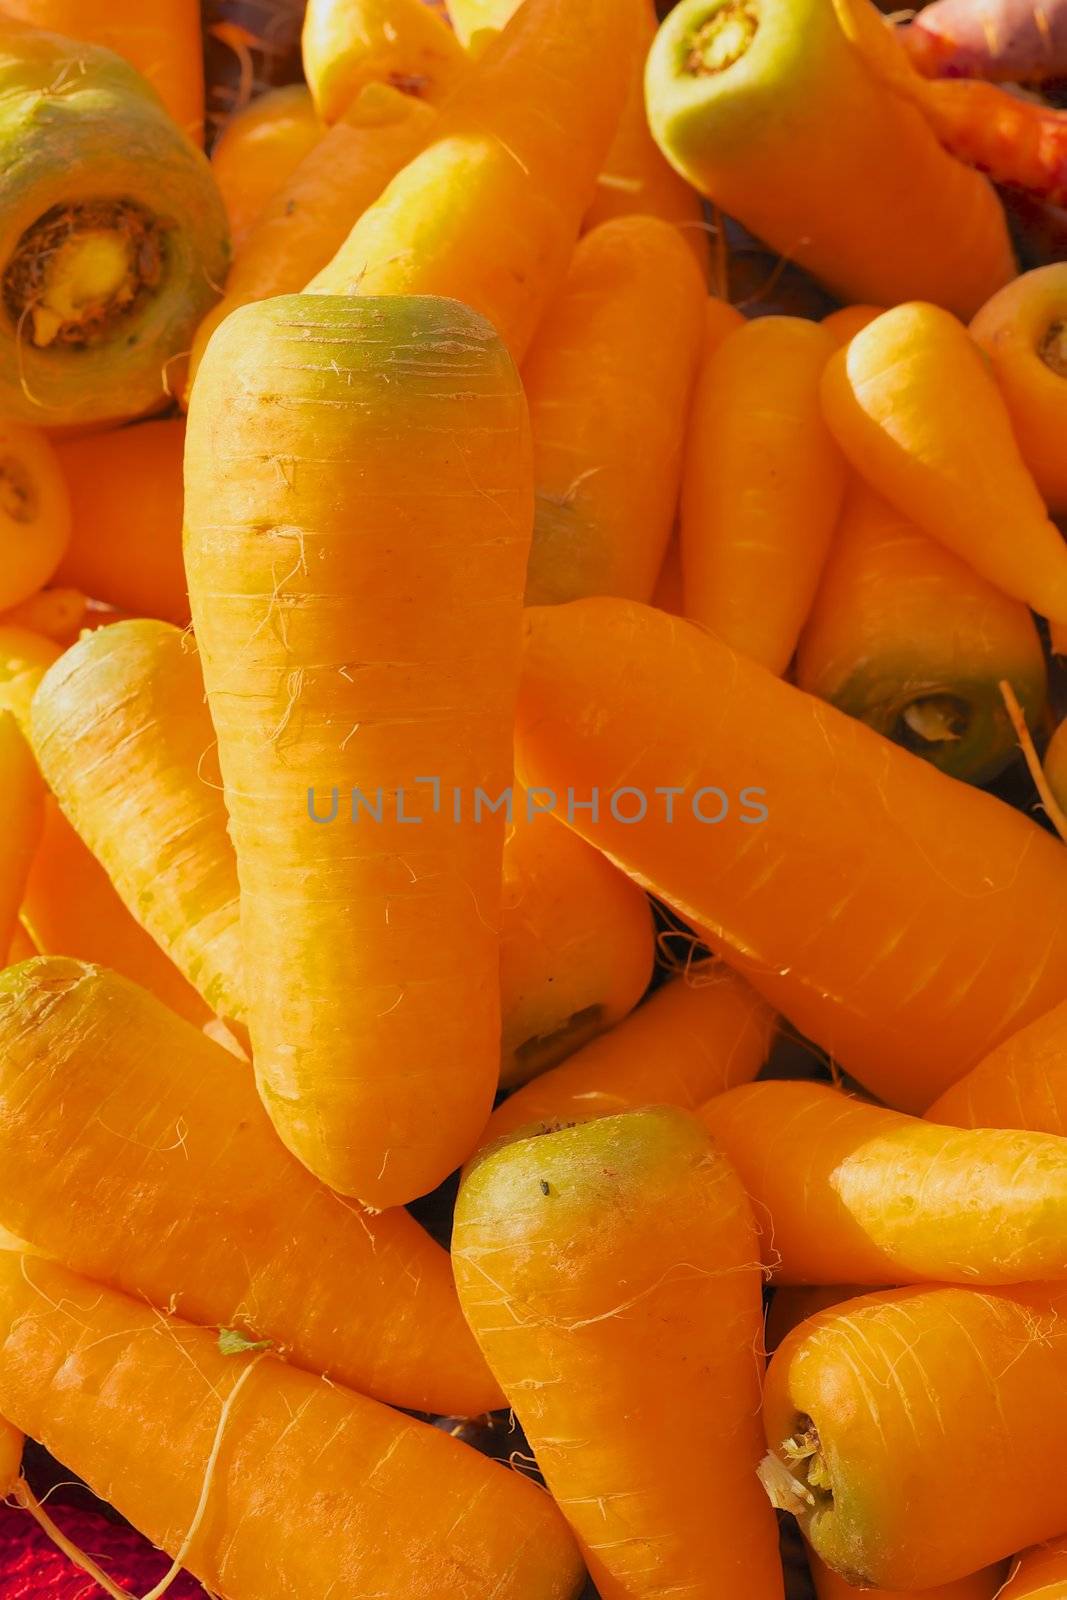 Short Fat Carrots by bobkeenan